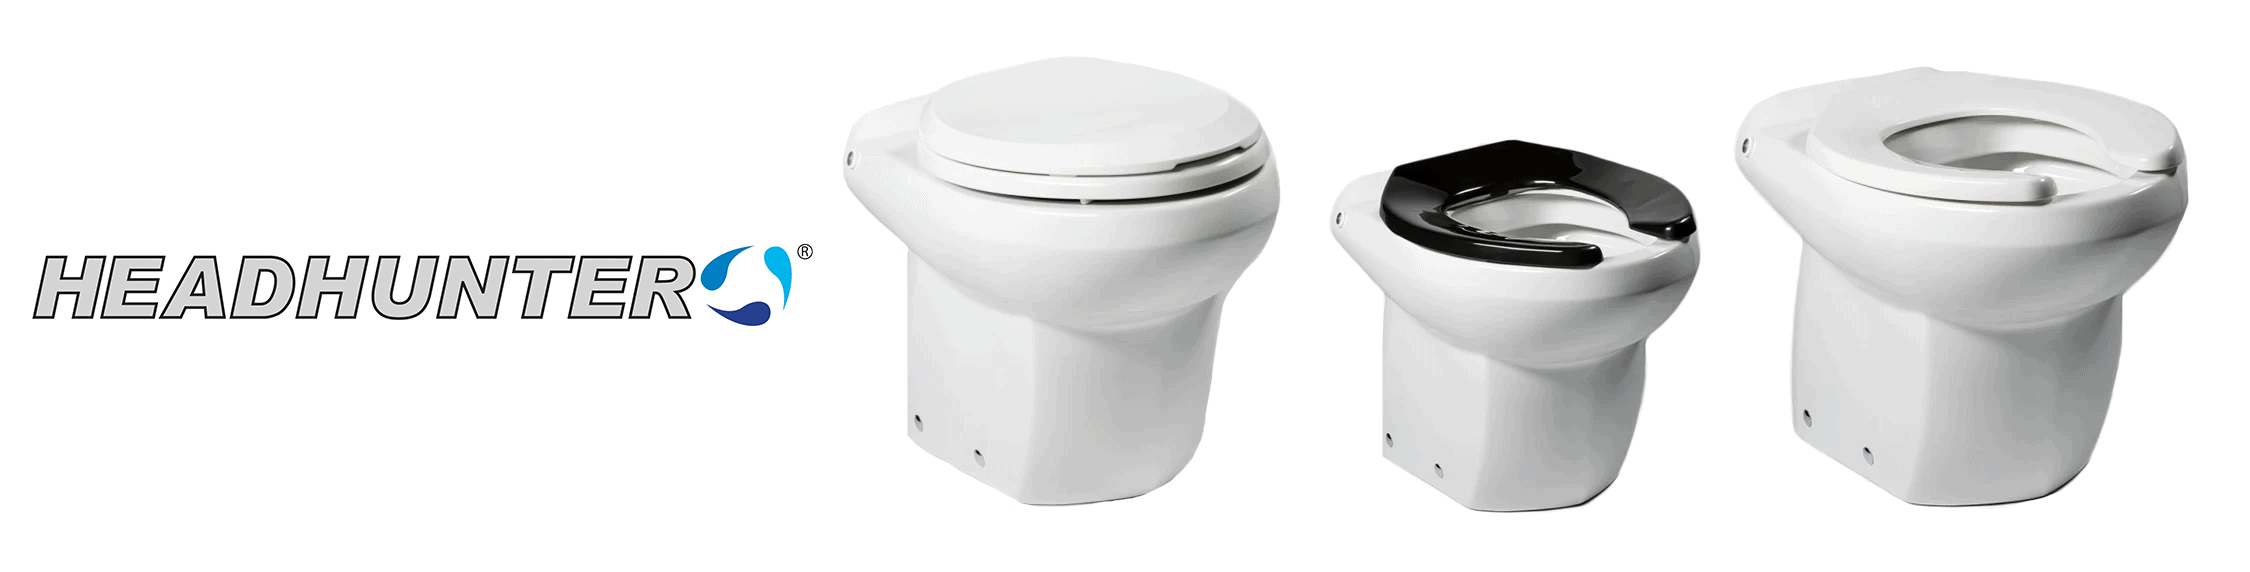 Headhunter Marine Sanitation System Accessories